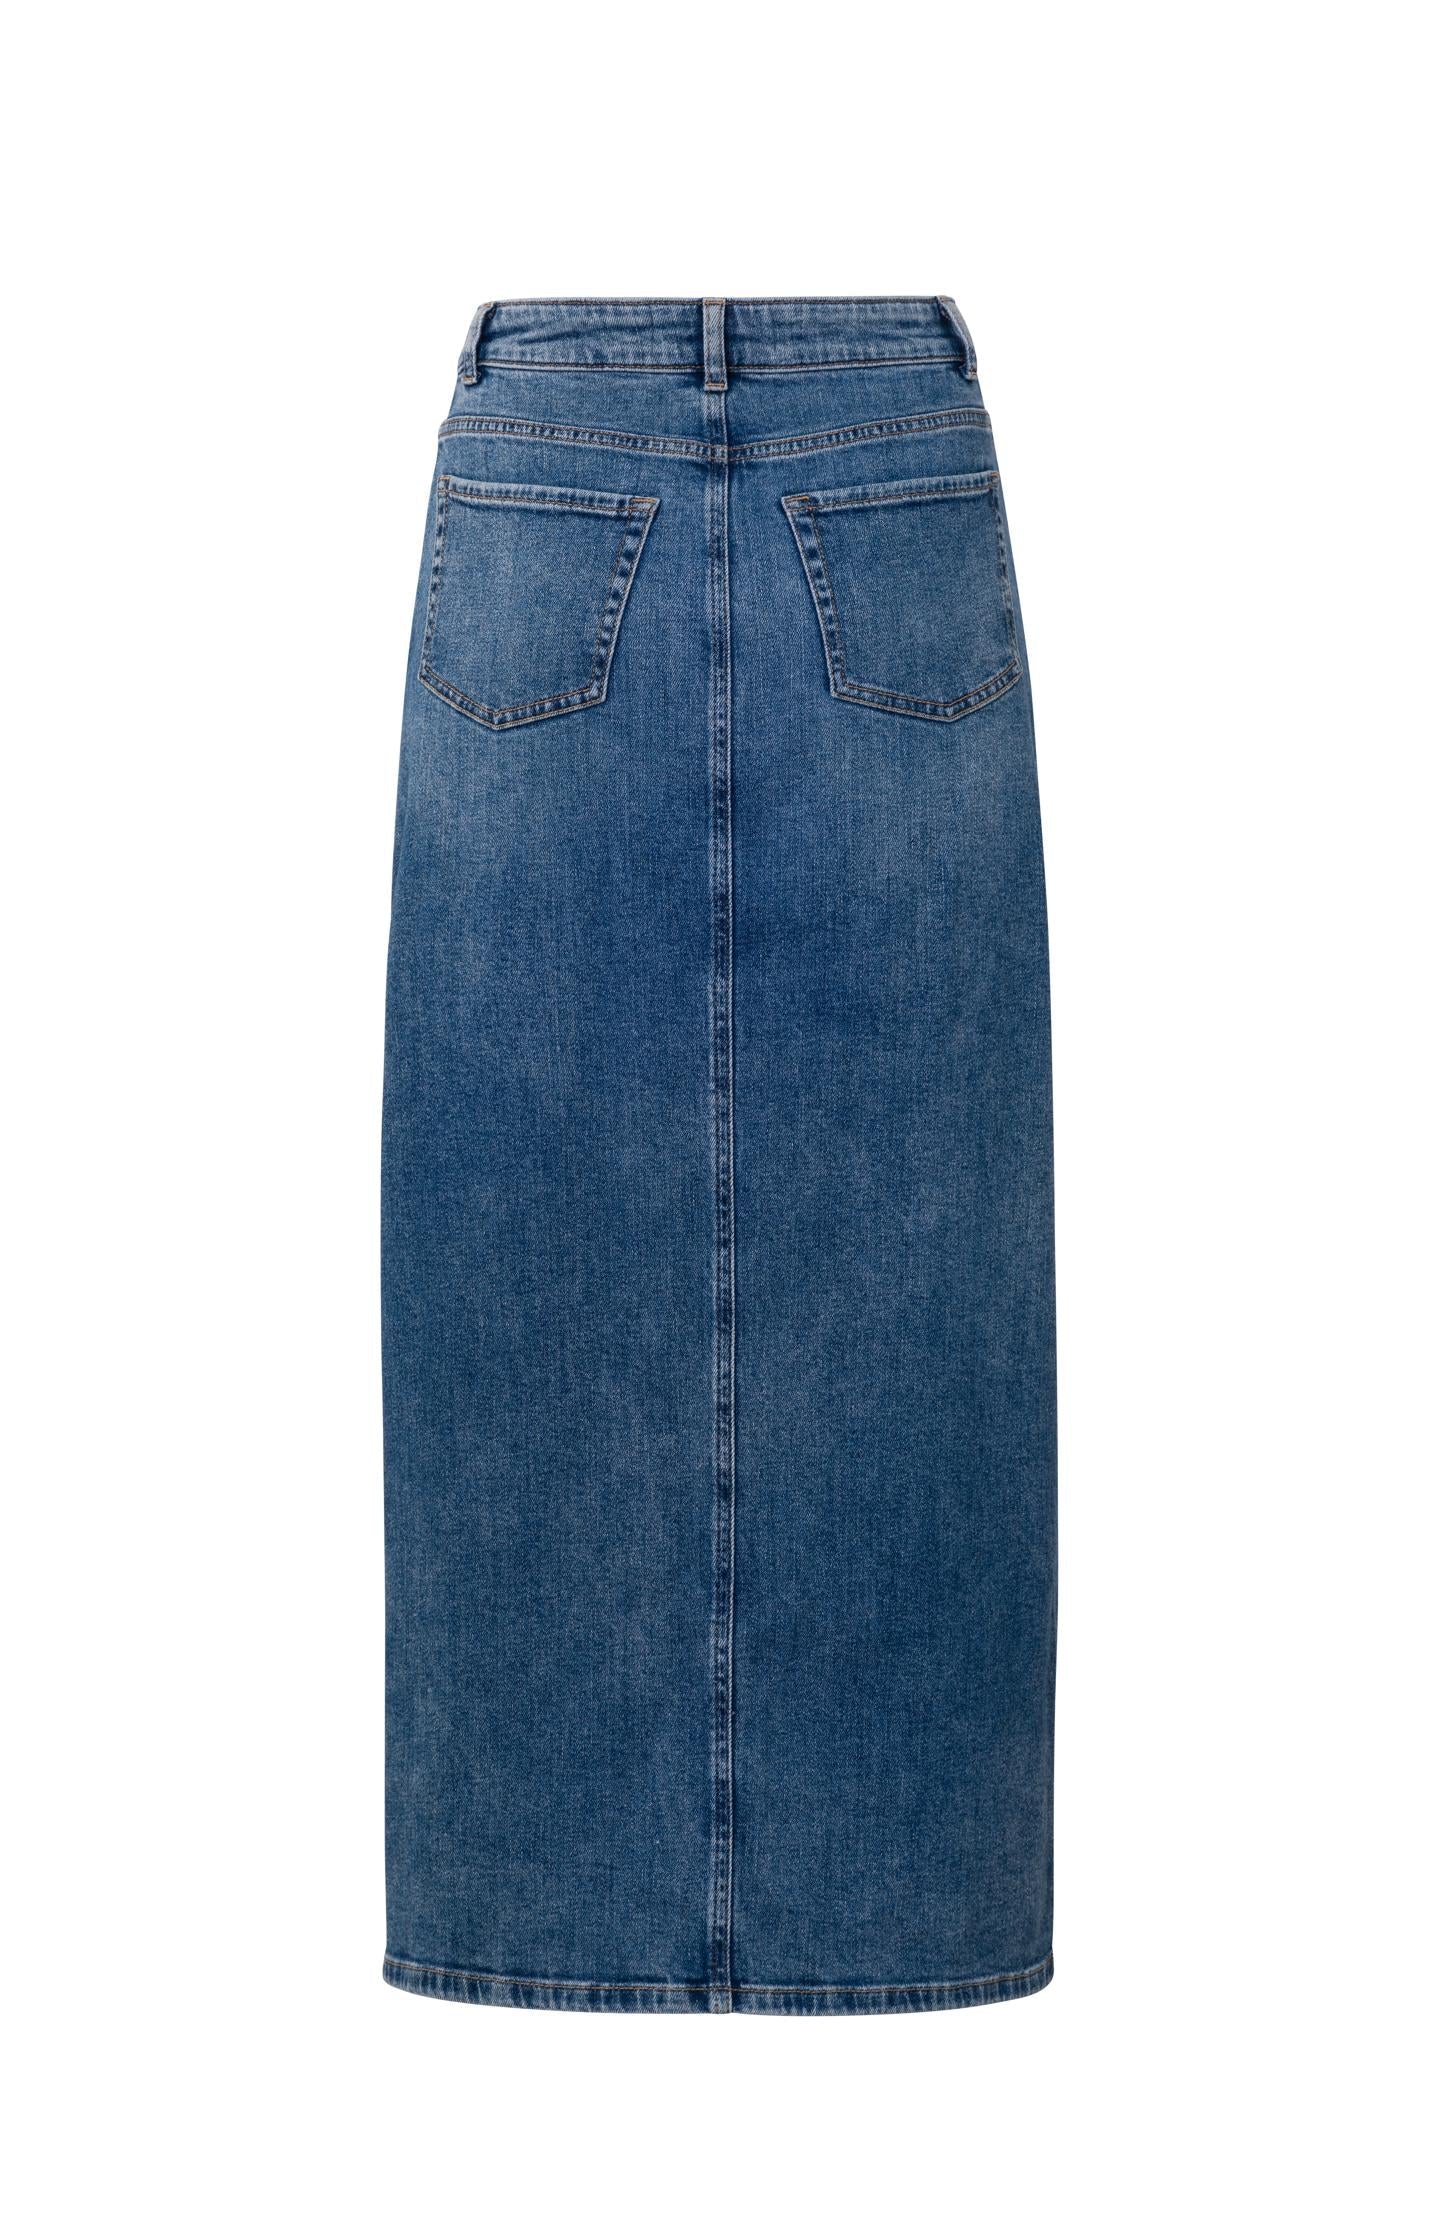 Yaya Denim Maxi Skirt - Blue Denim Clothing - Bottoms - Other Bottoms - Skirts by Yaya | Grace the Boutique